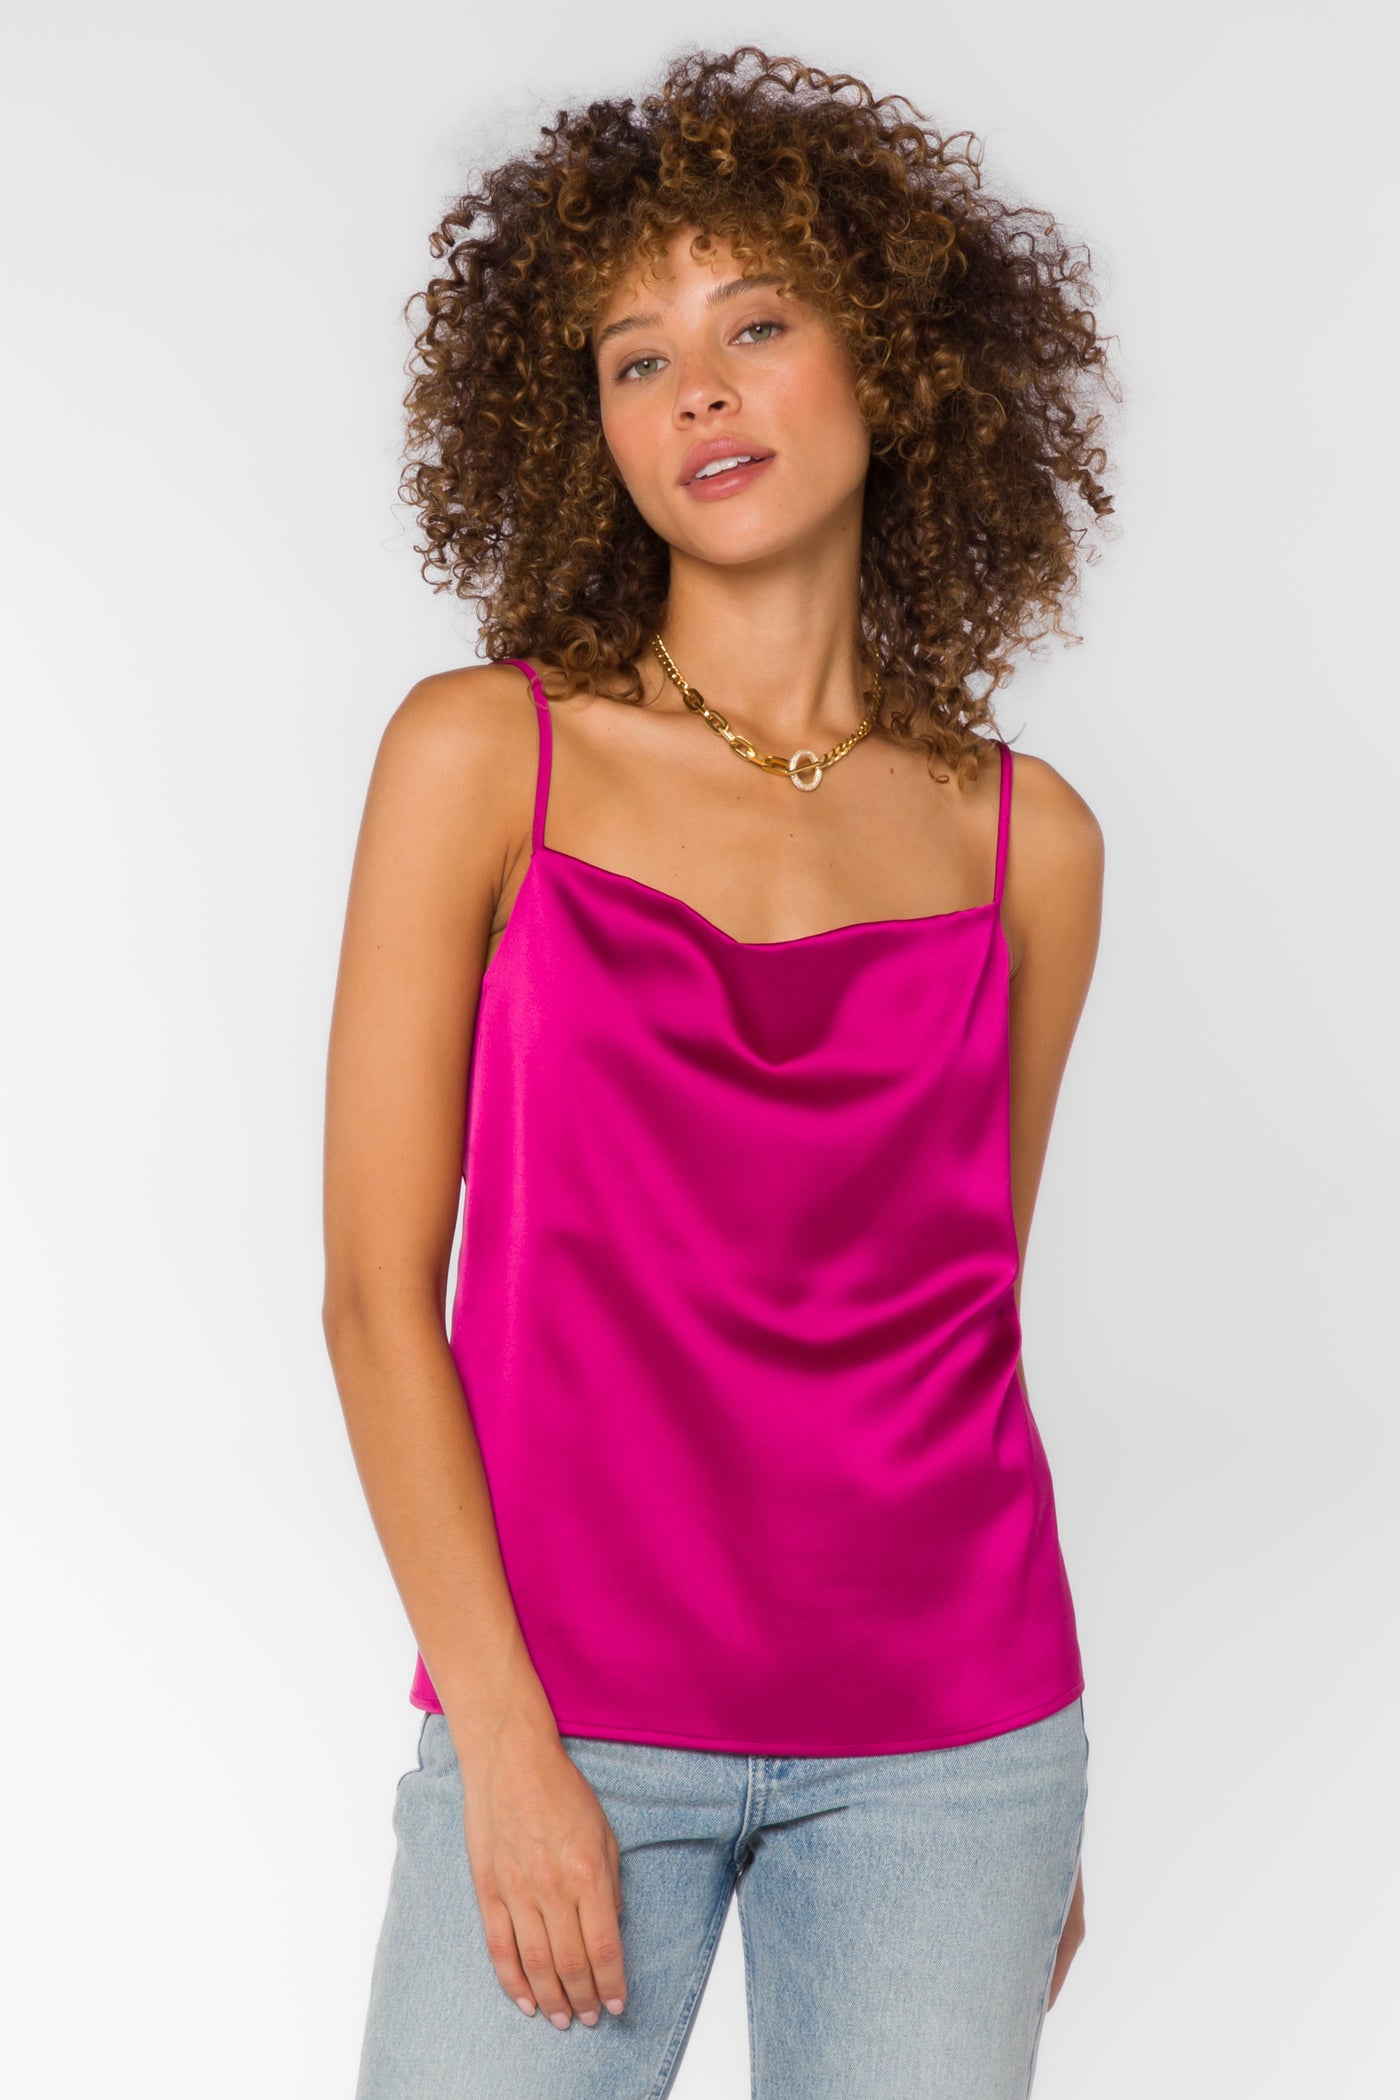 Mindy Fuchsia Top - Tops - Velvet Heart Clothing